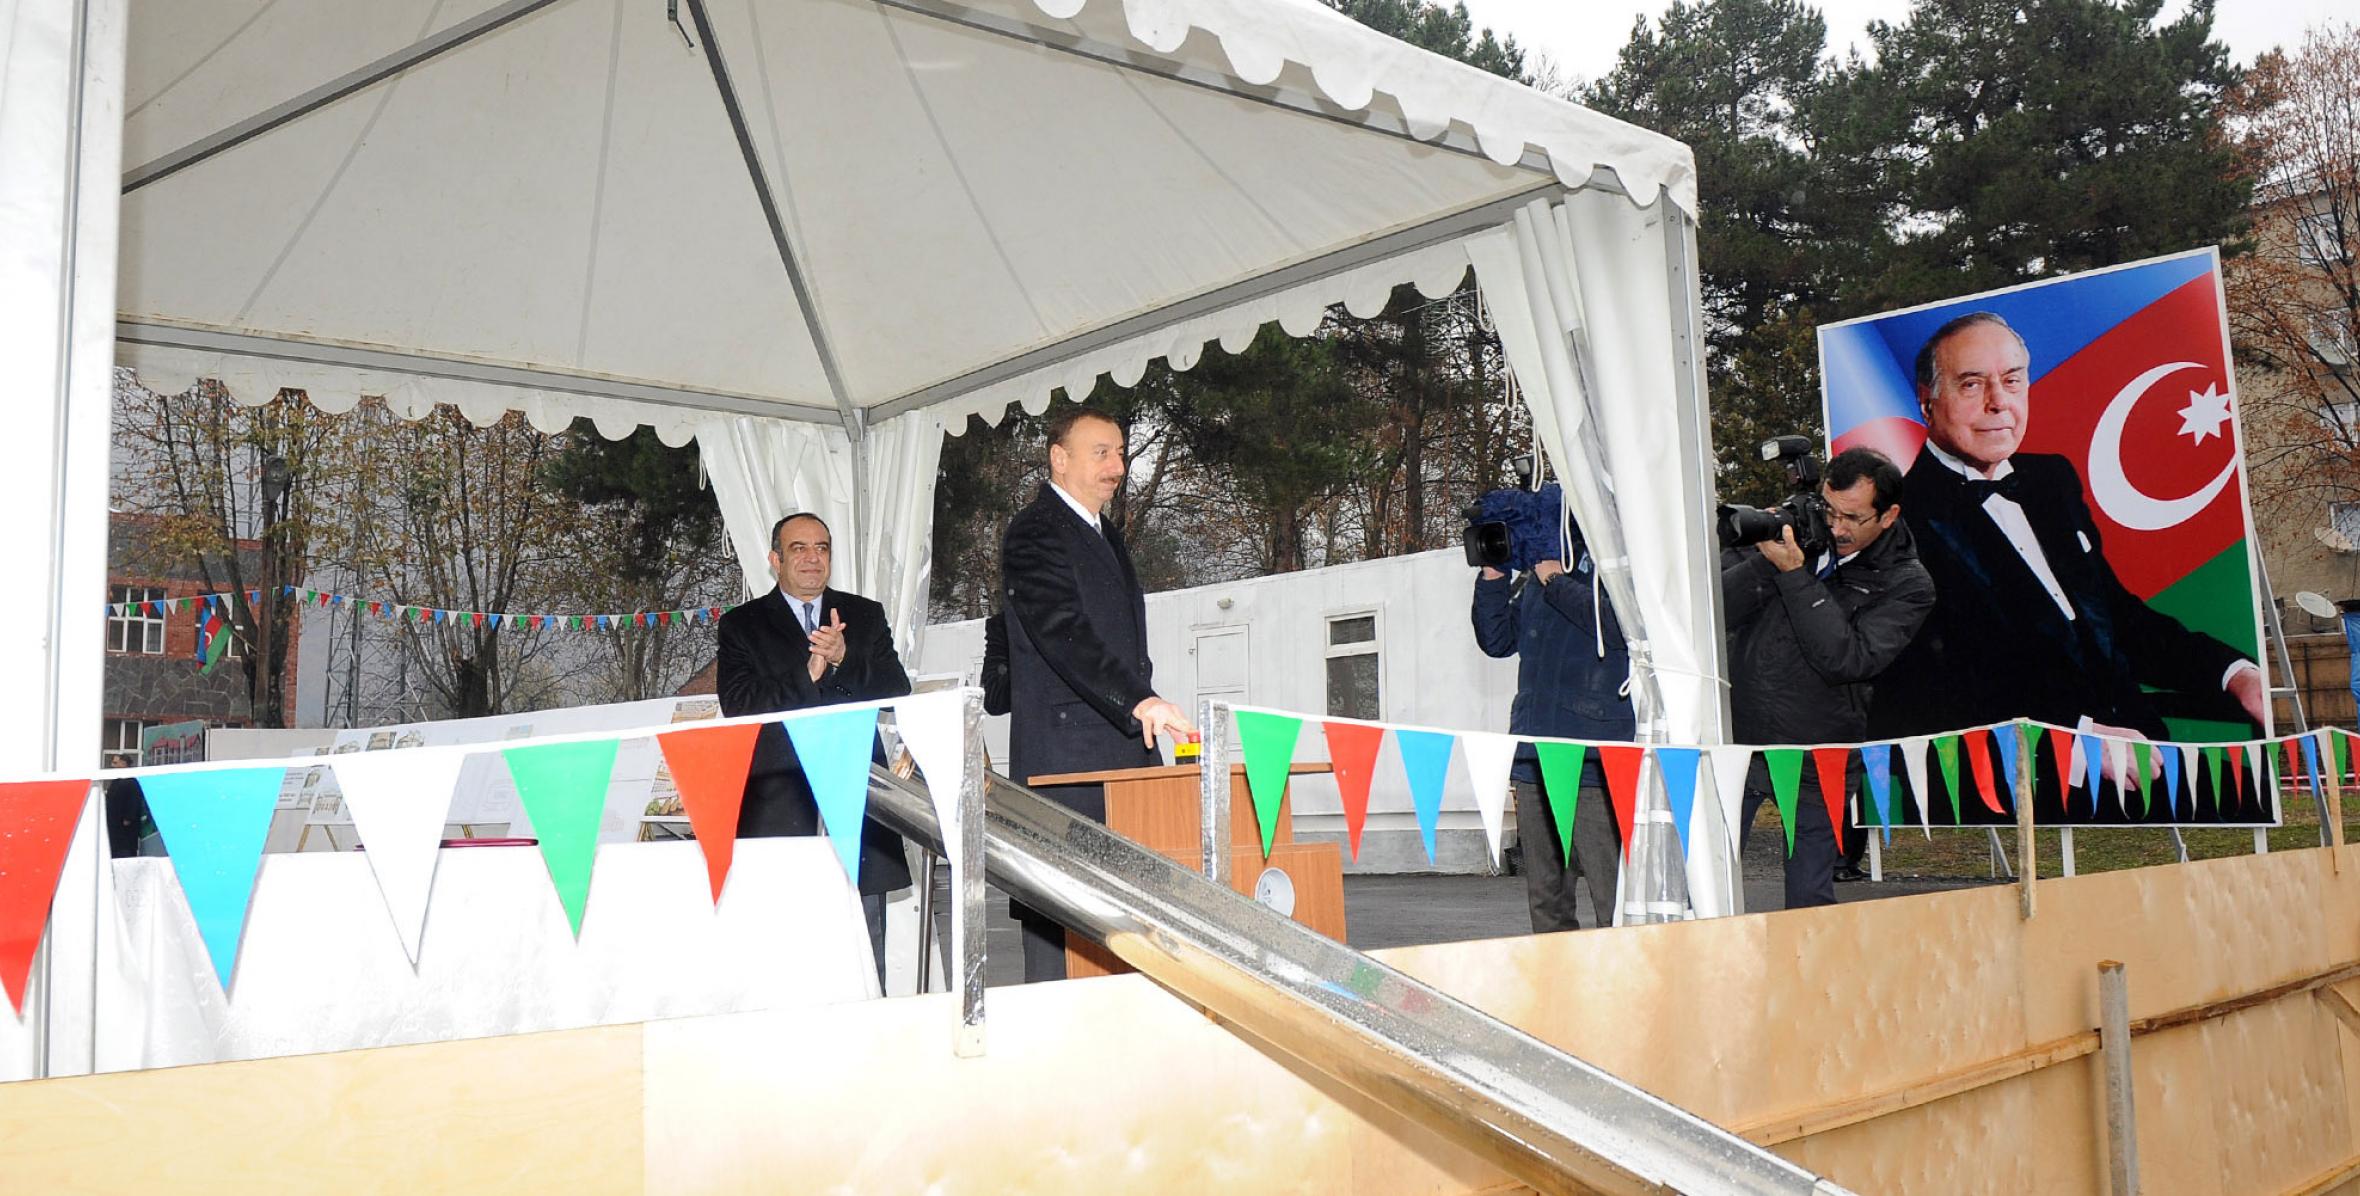 Ilham Aliyev attended the groundbreaking ceremony for the Heydar Aliyev Center in Gakh